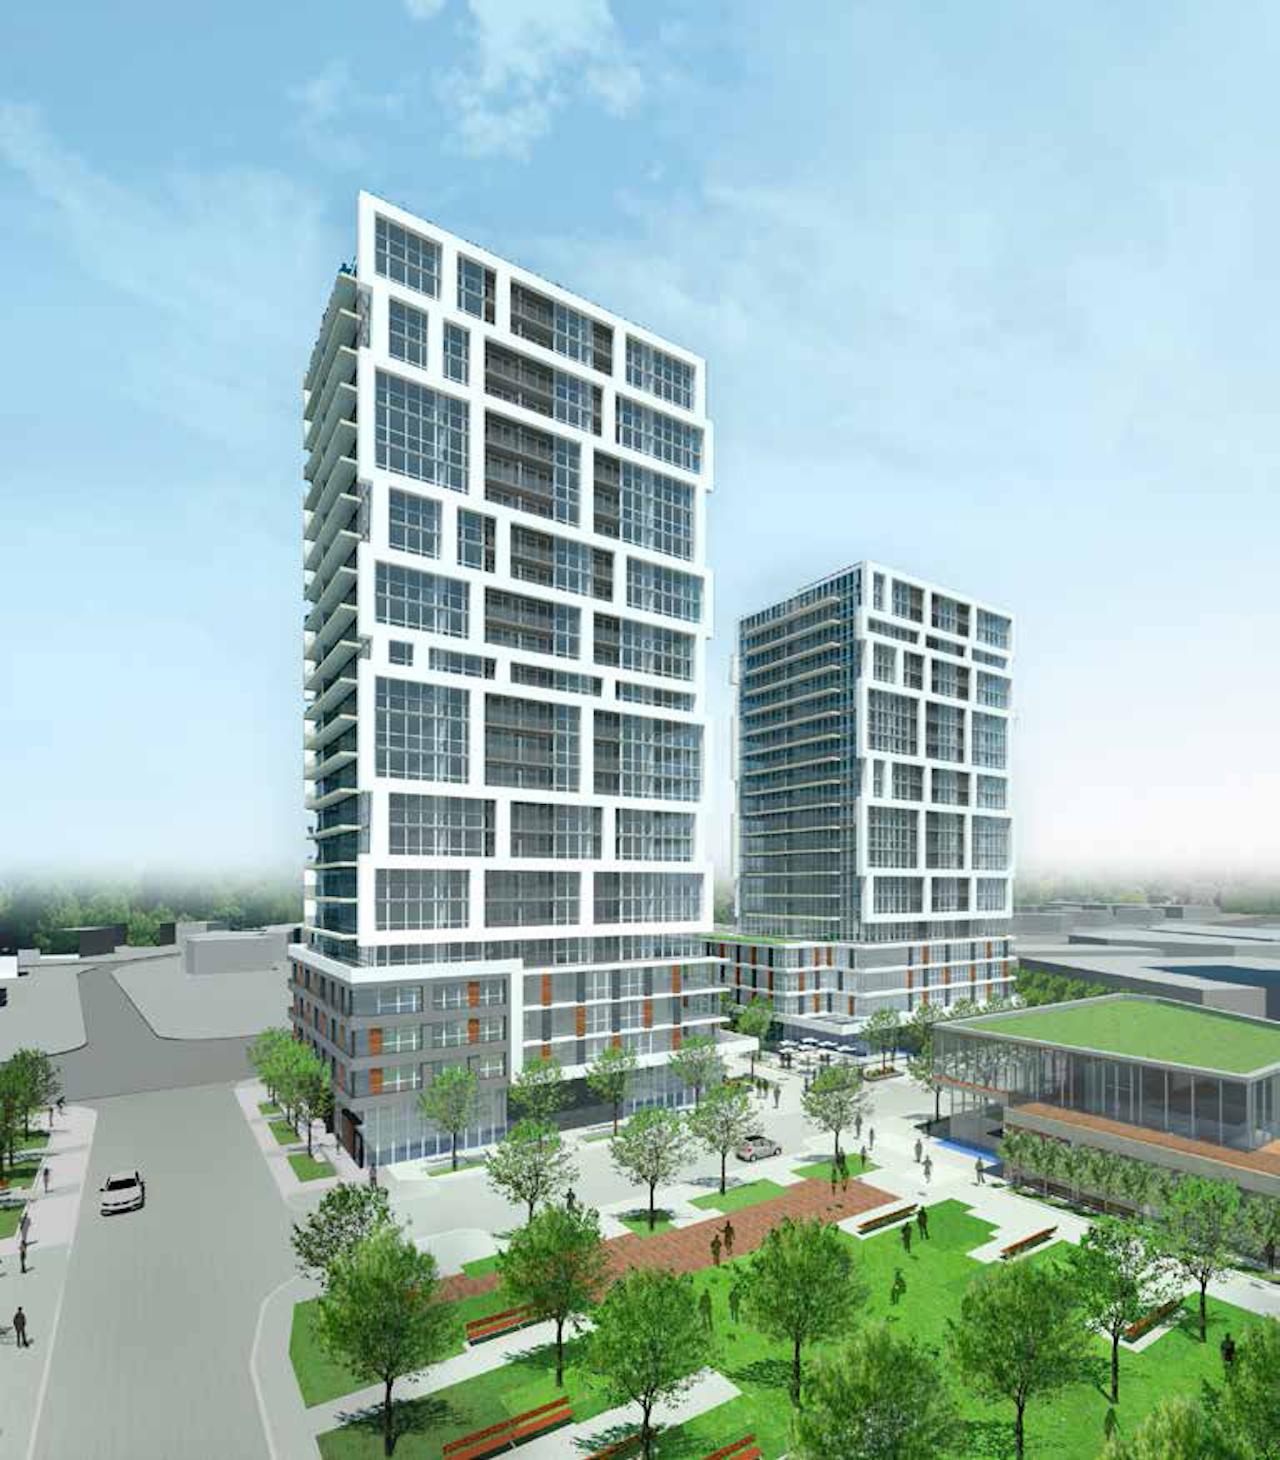 Kip District Condos Building View Toronto, Canada